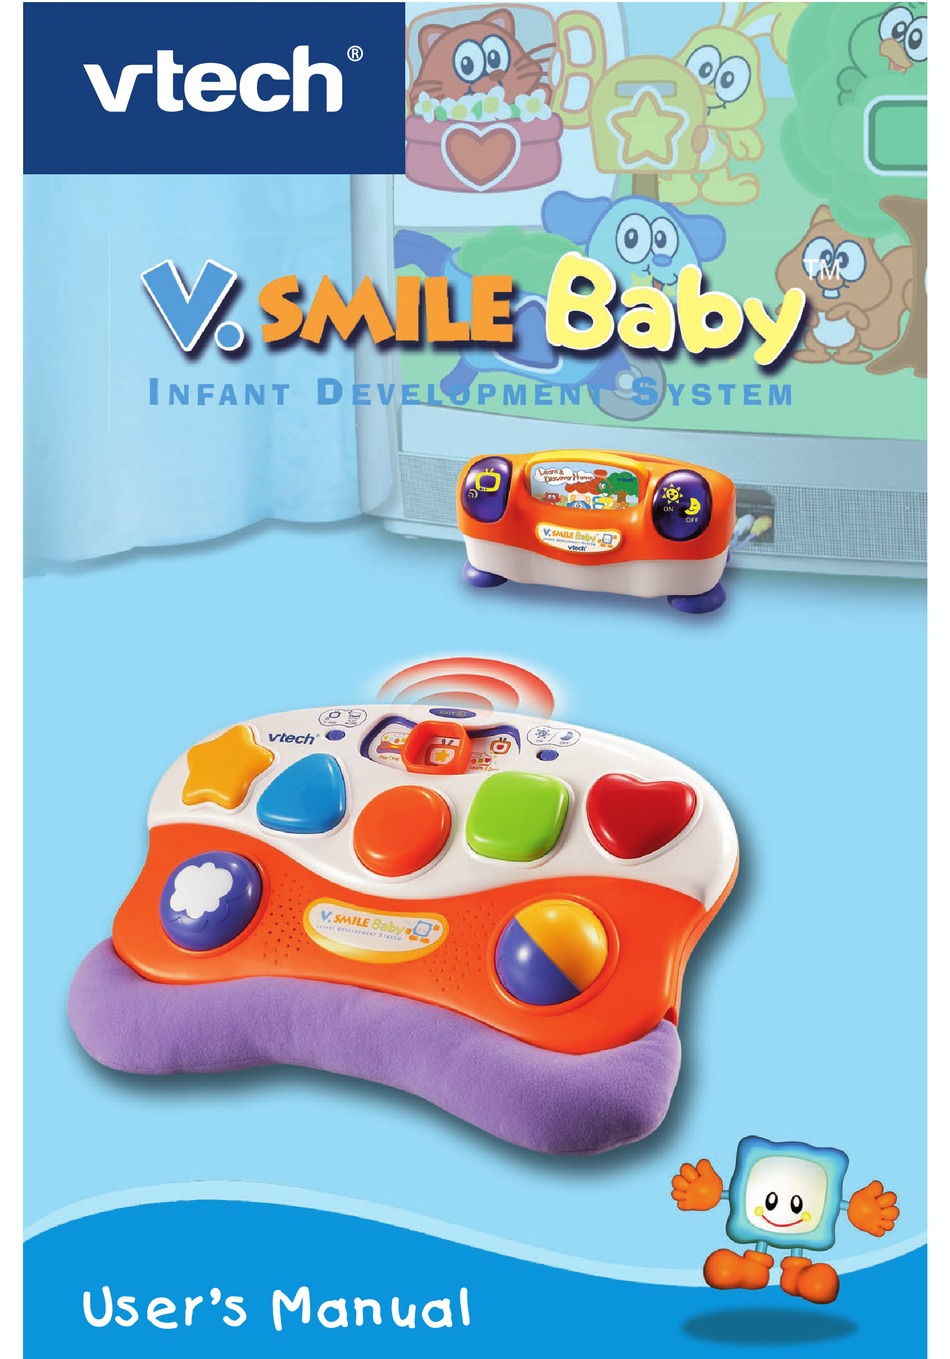 V.Smile Baby Infant Development System VTech